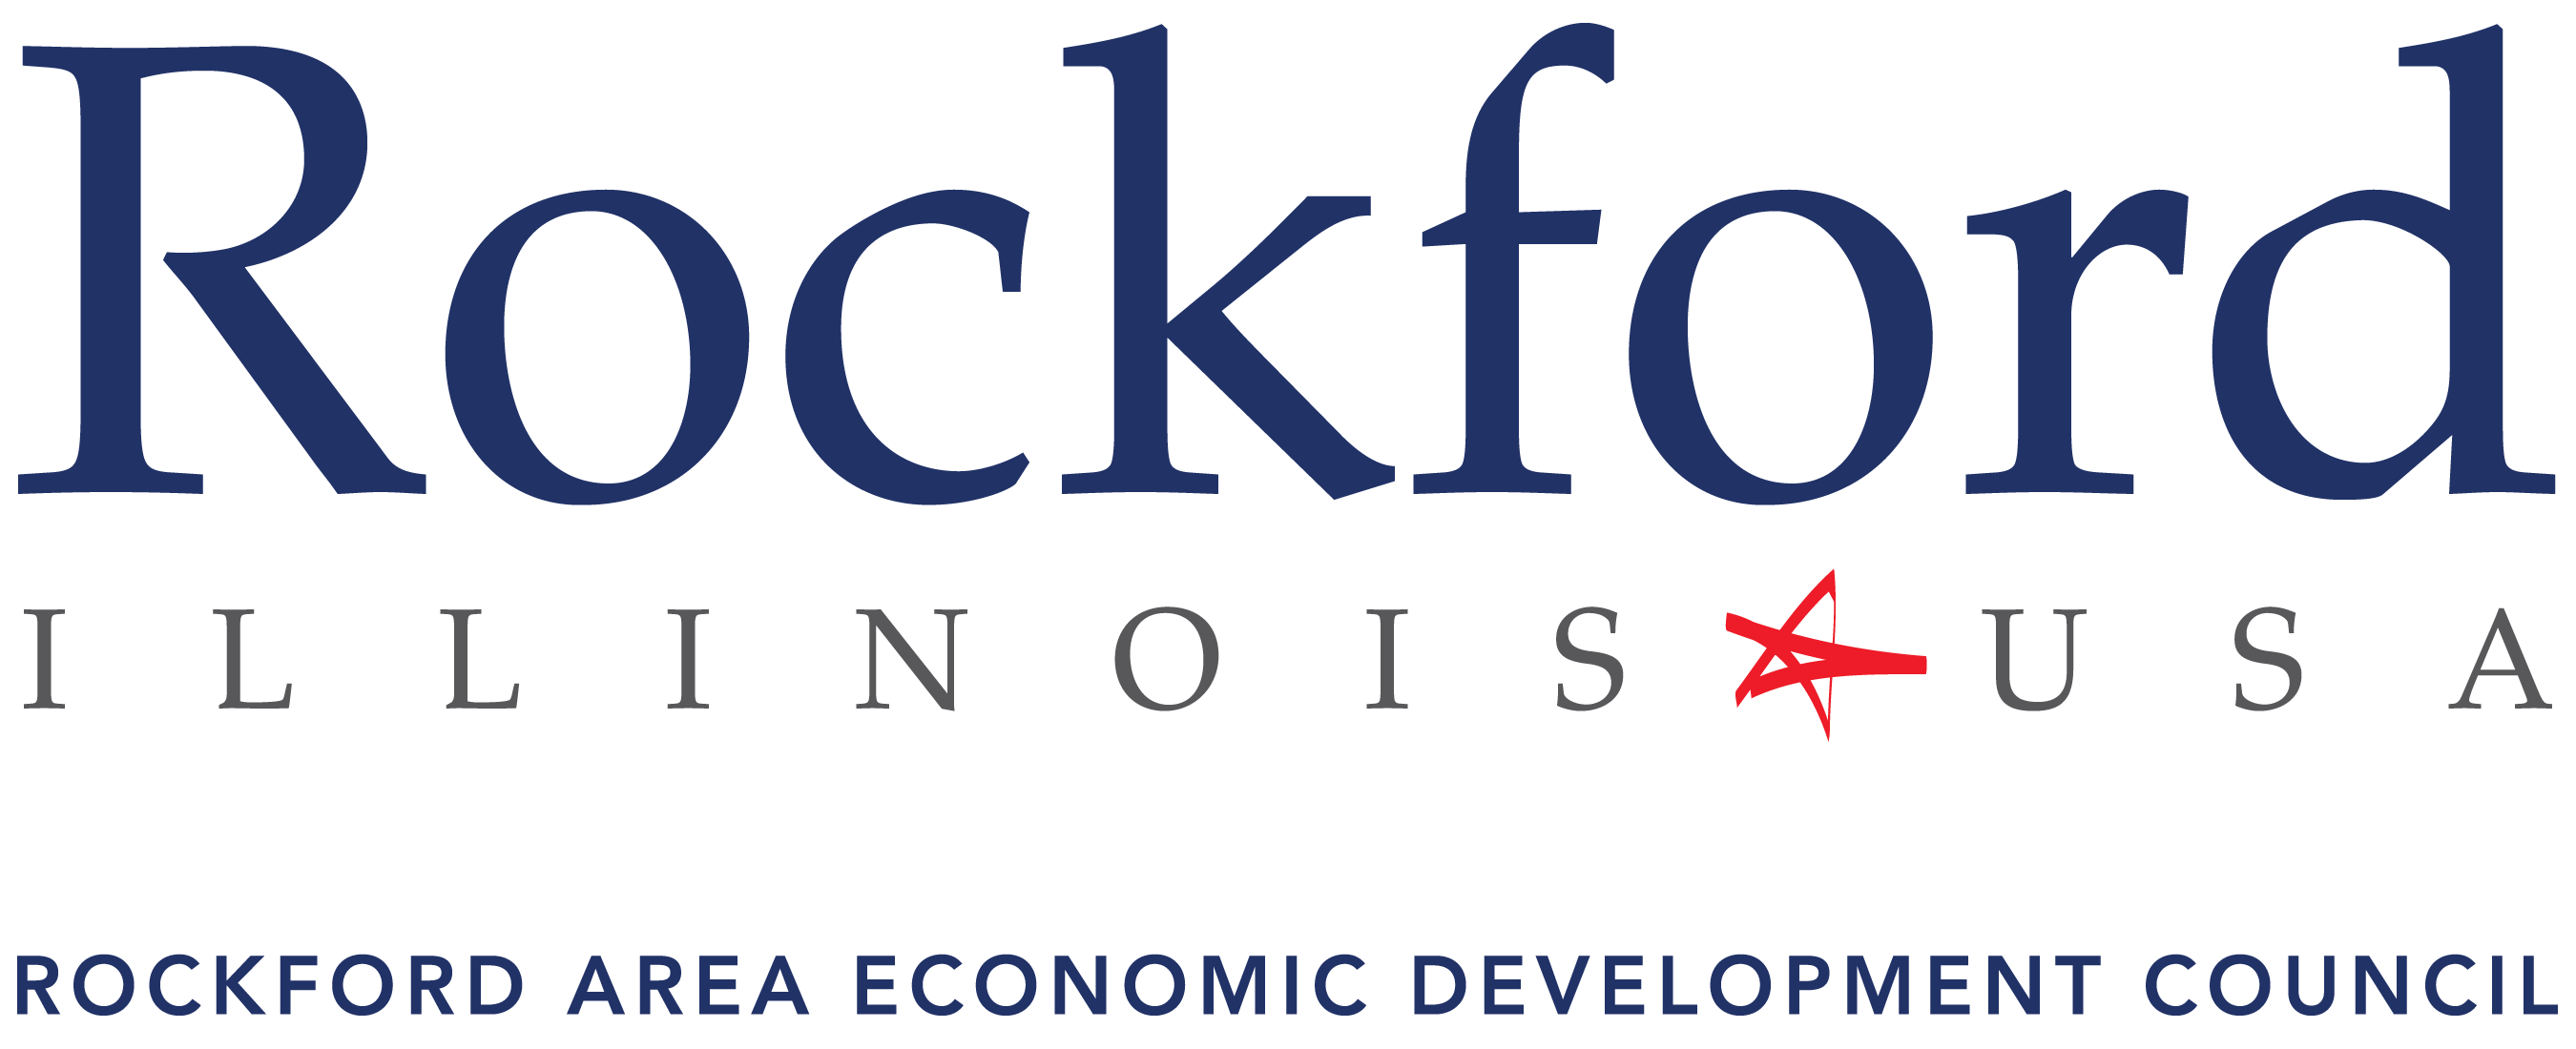 Rockford, Illinois, USA - Rockford Area Economic Development Council